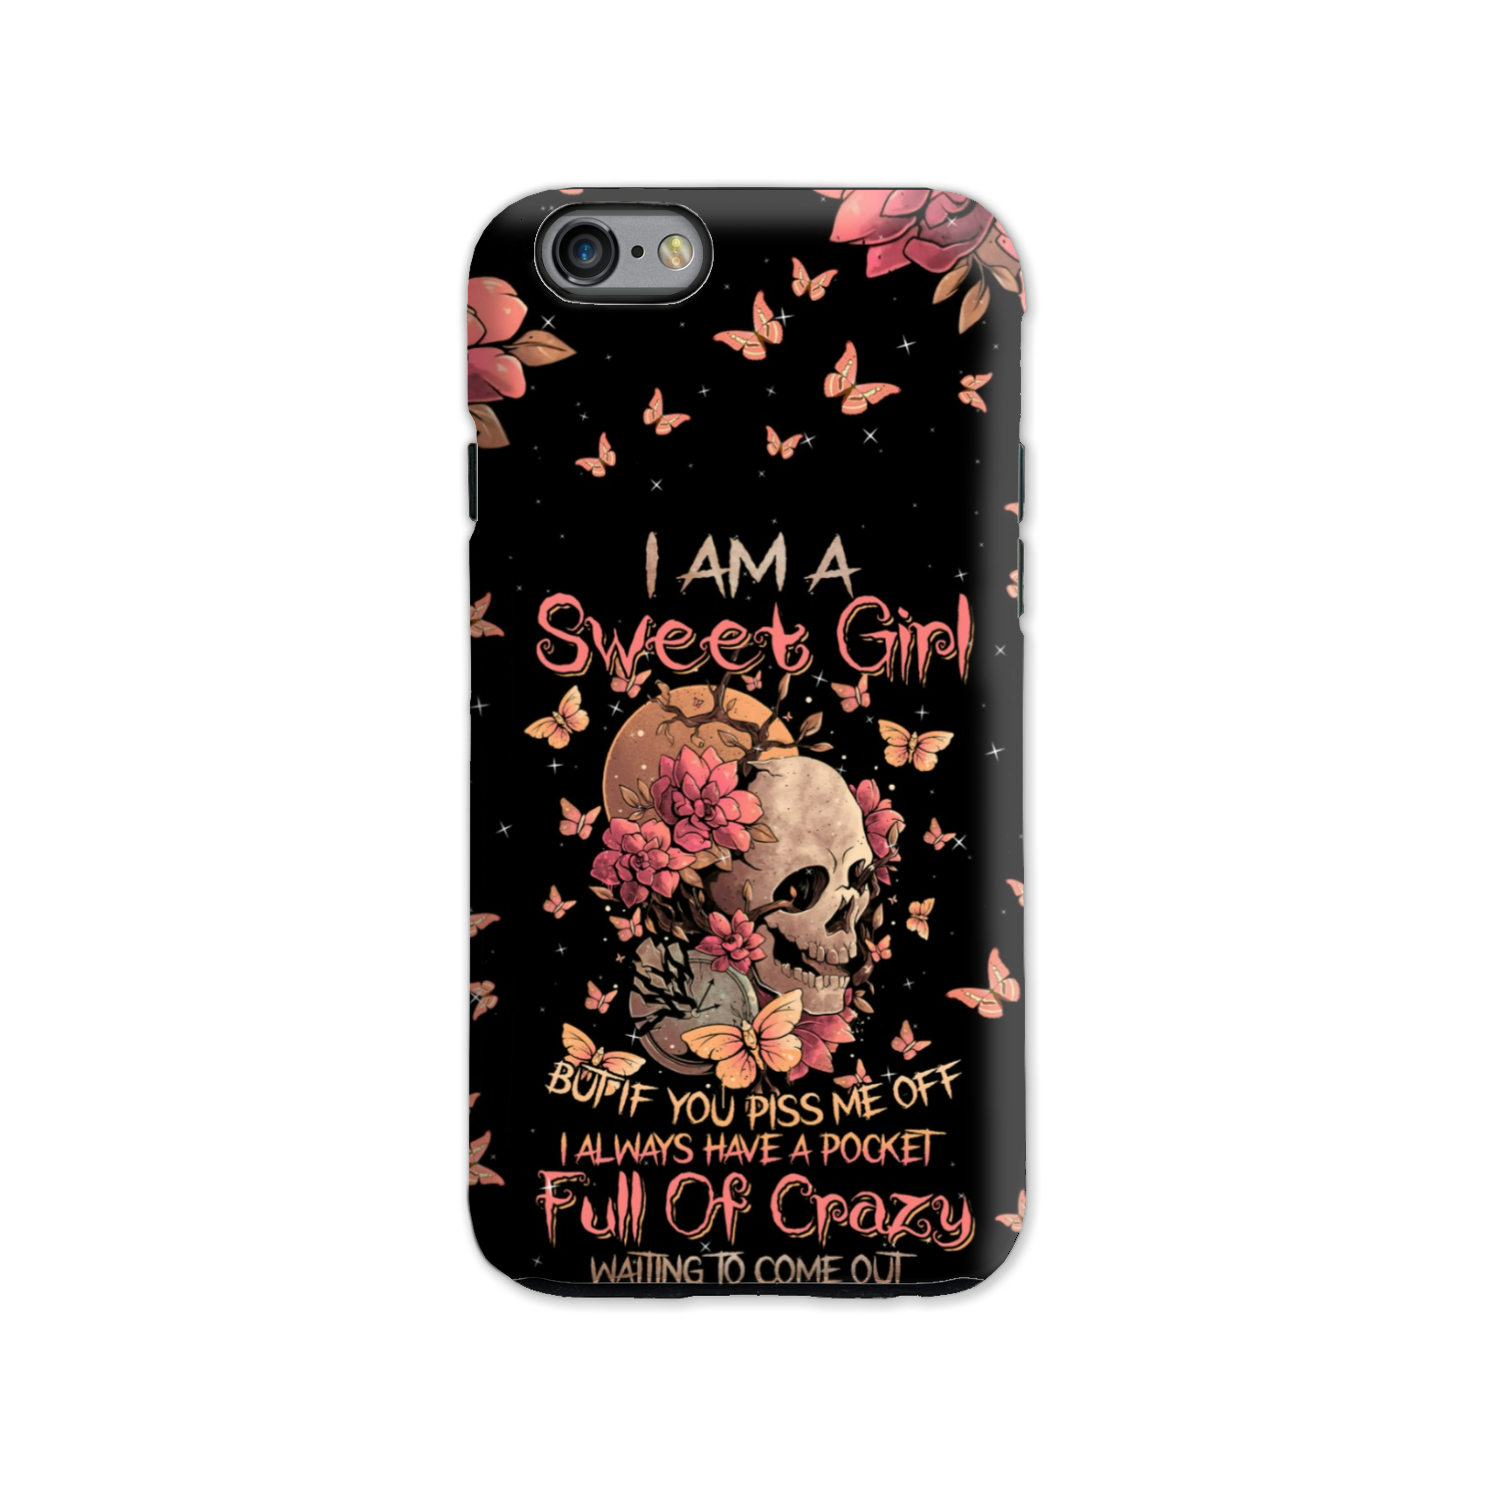 I AM A SWEET GIRL FLOWER SKULL PHONE CASE - TLNZ3101235